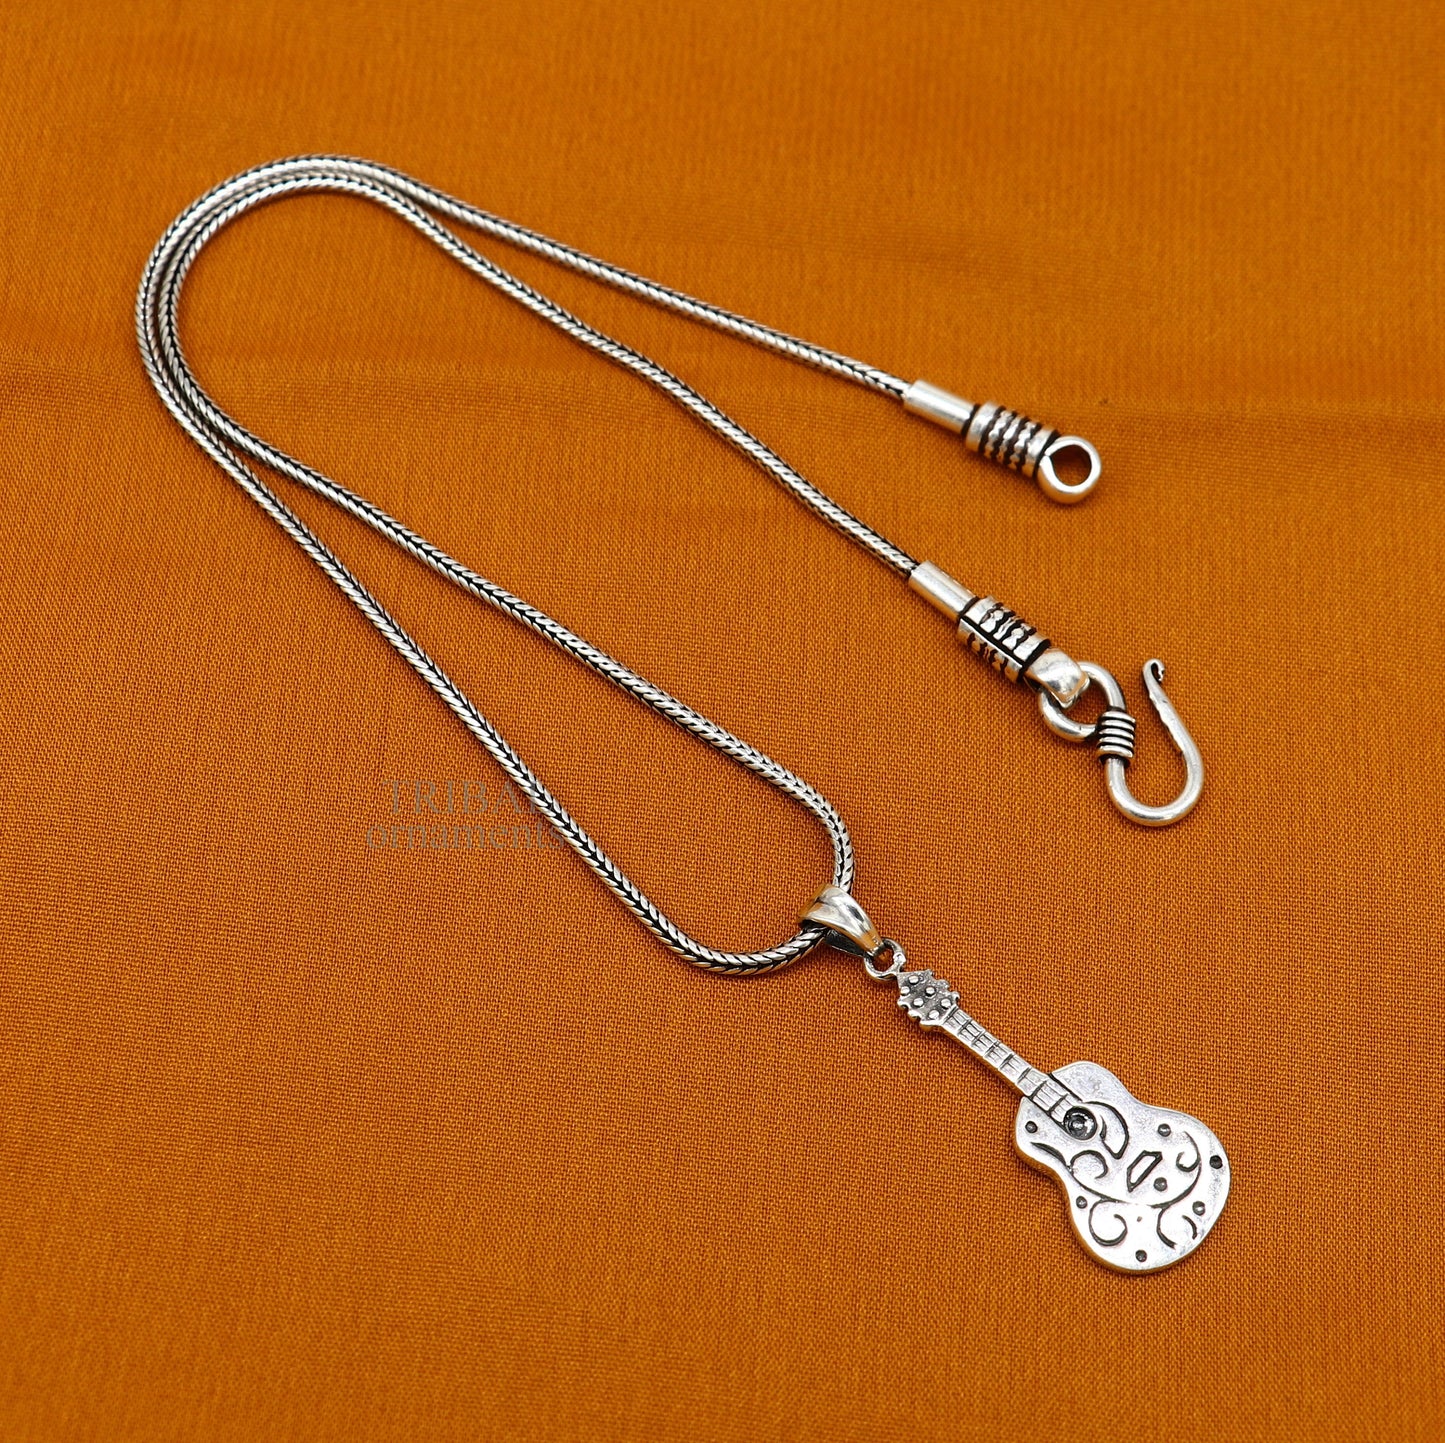 925 sterling silver handmade amazing small guitar design pendant, amazing stylish unisex pendant unisex jewelry tribal jewelry ssp1453 - TRIBAL ORNAMENTS